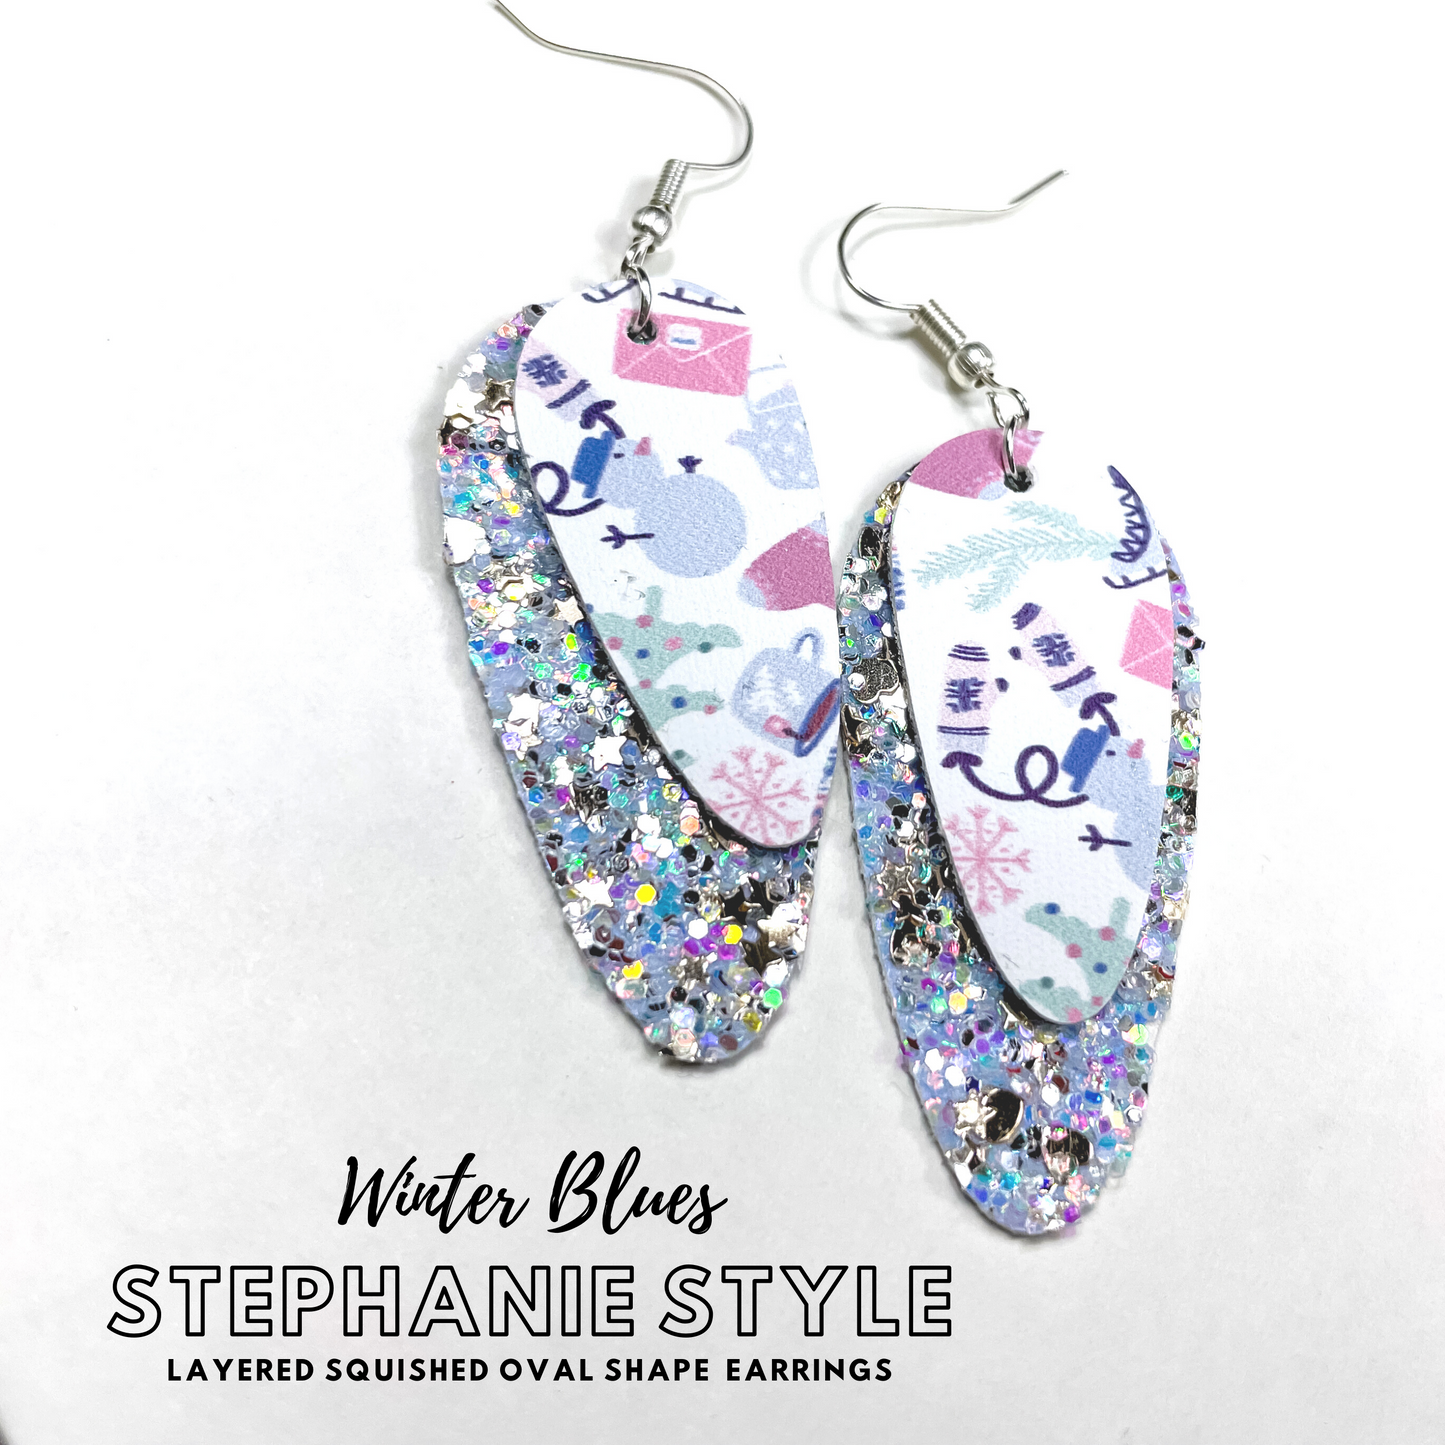 Winter Blues Dangle Earrings | Stephanie Style Dangle Earrings | Layered Squished Ovoid/Oval Shape